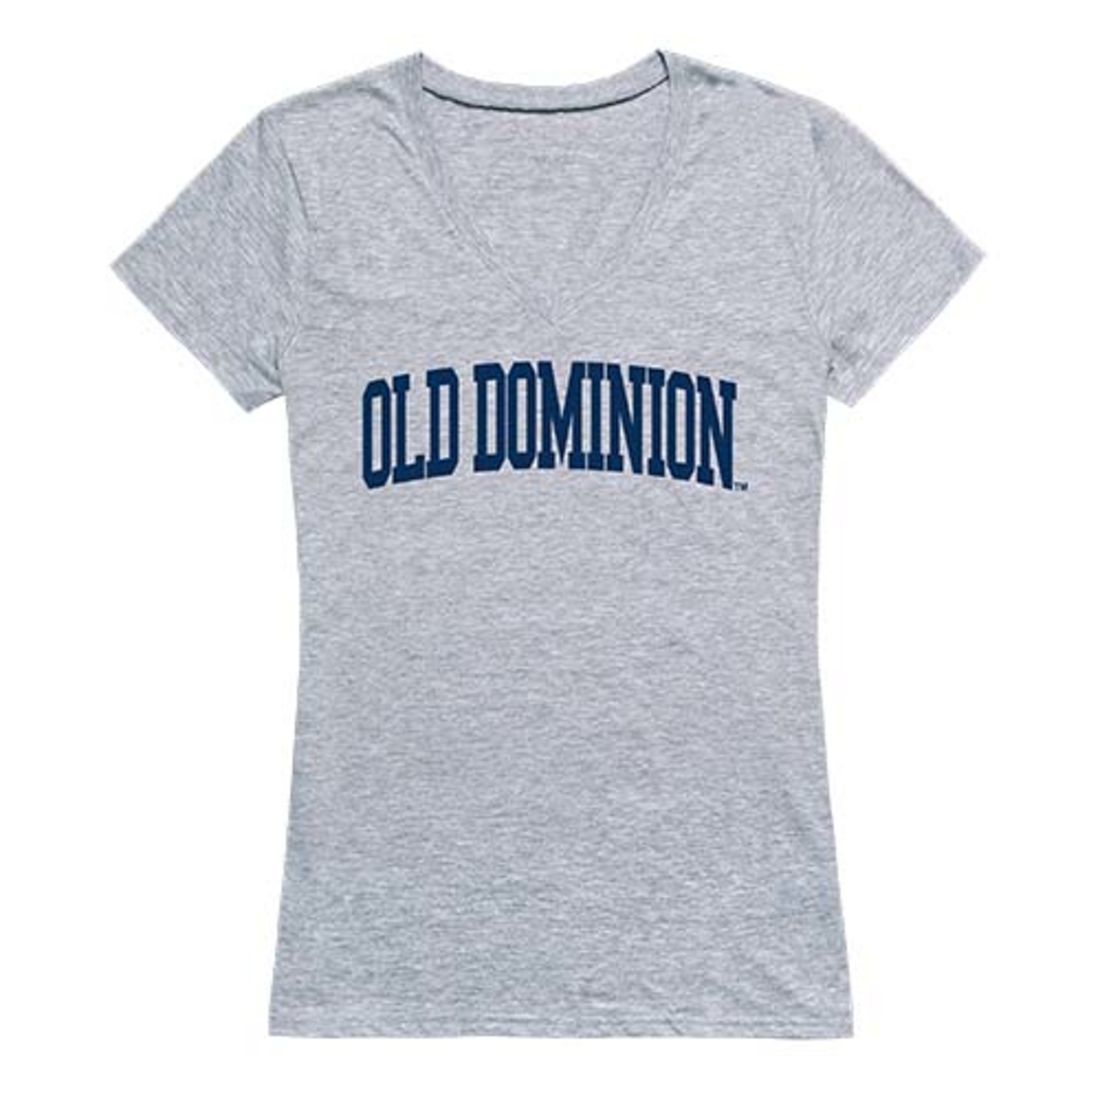 ODU Old Dominion University Game Day Women's Tee T-Shirt Heather Grey-Campus-Wardrobe